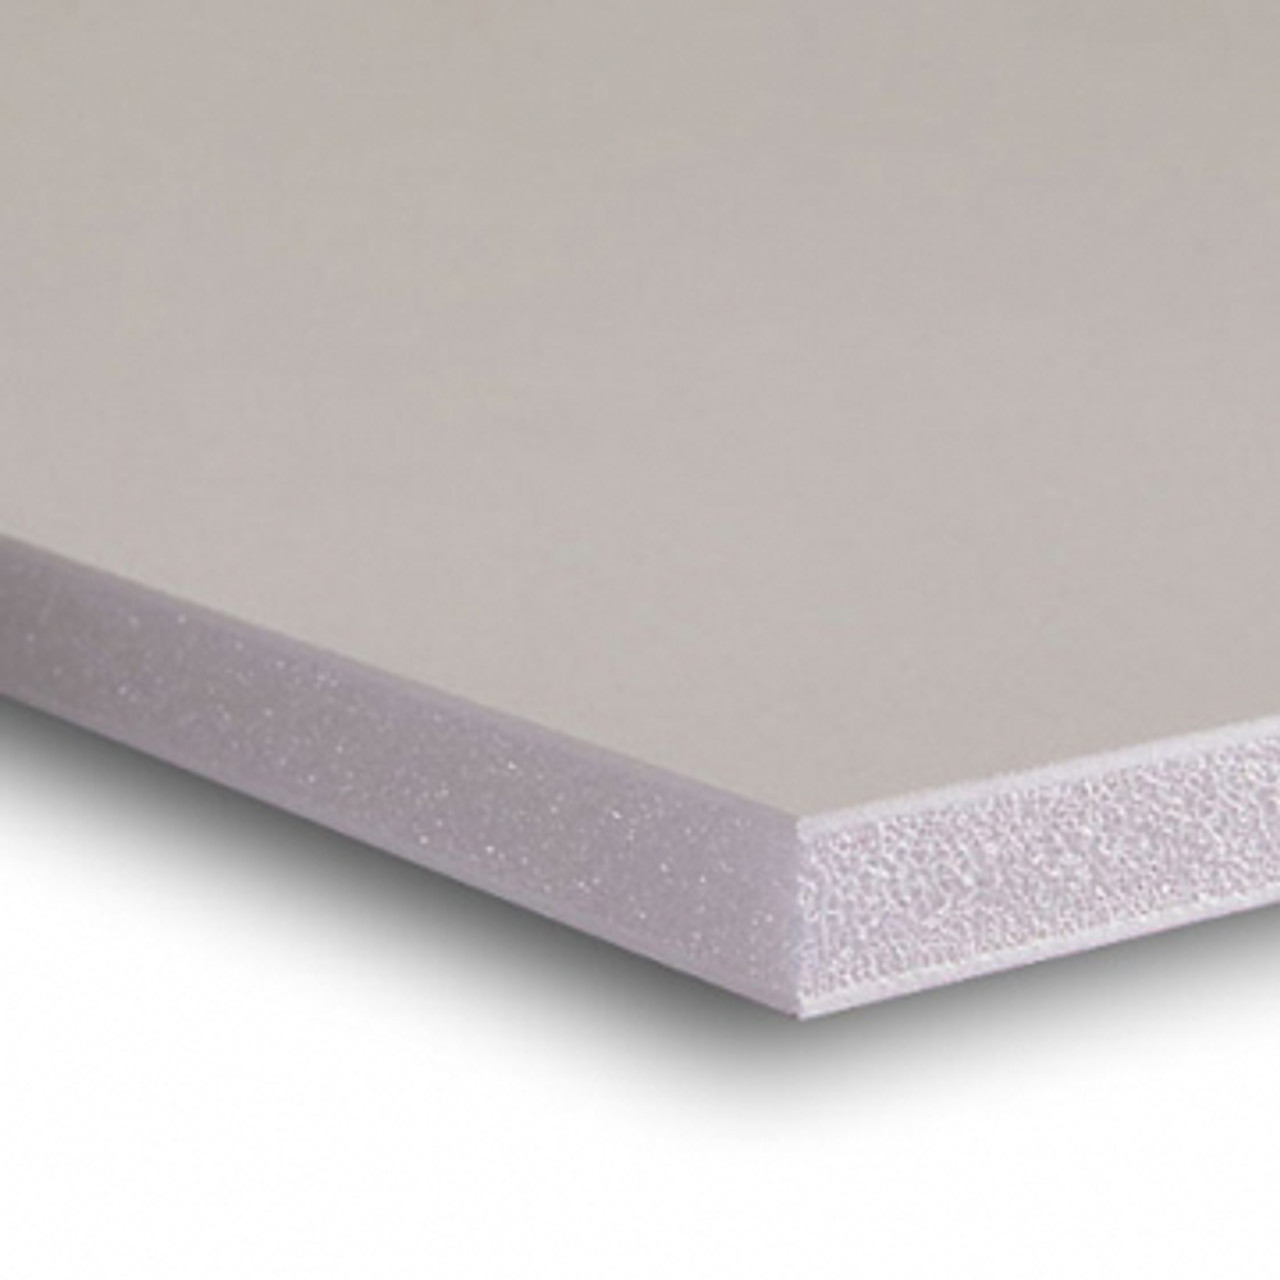 3/16 White 1 Side Self Adhesive Foam Core Boards : 36 x 48